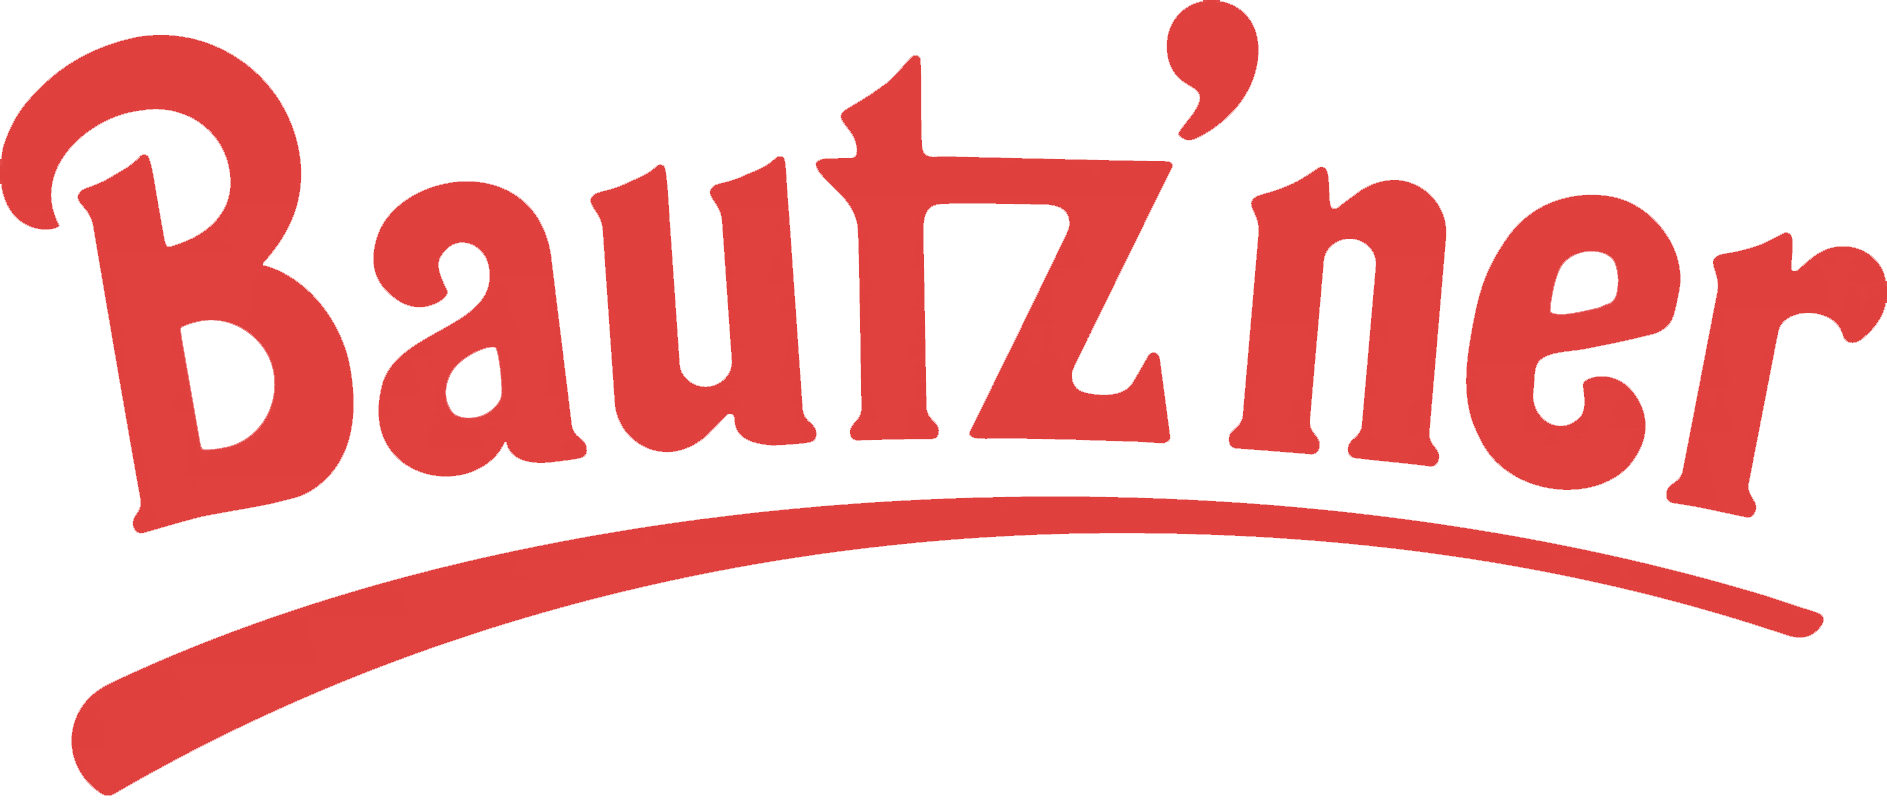 bautzner logo